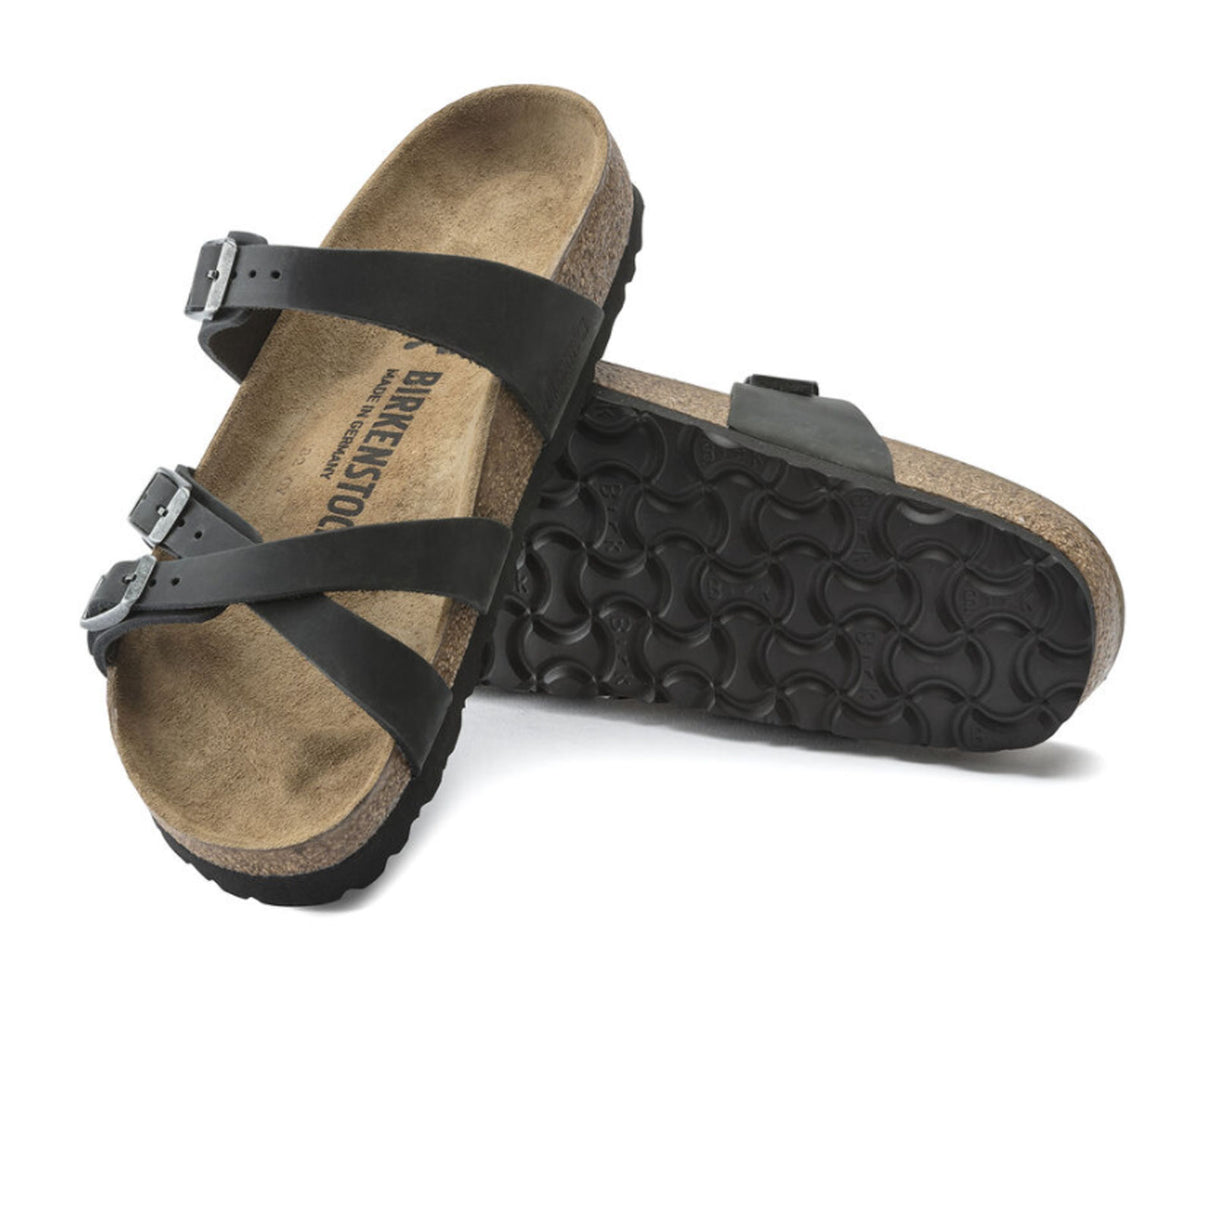 Birkenstock Franca Slide Sandal (Women) - Black Oiled Leather Sandals - Slide - The Heel Shoe Fitters